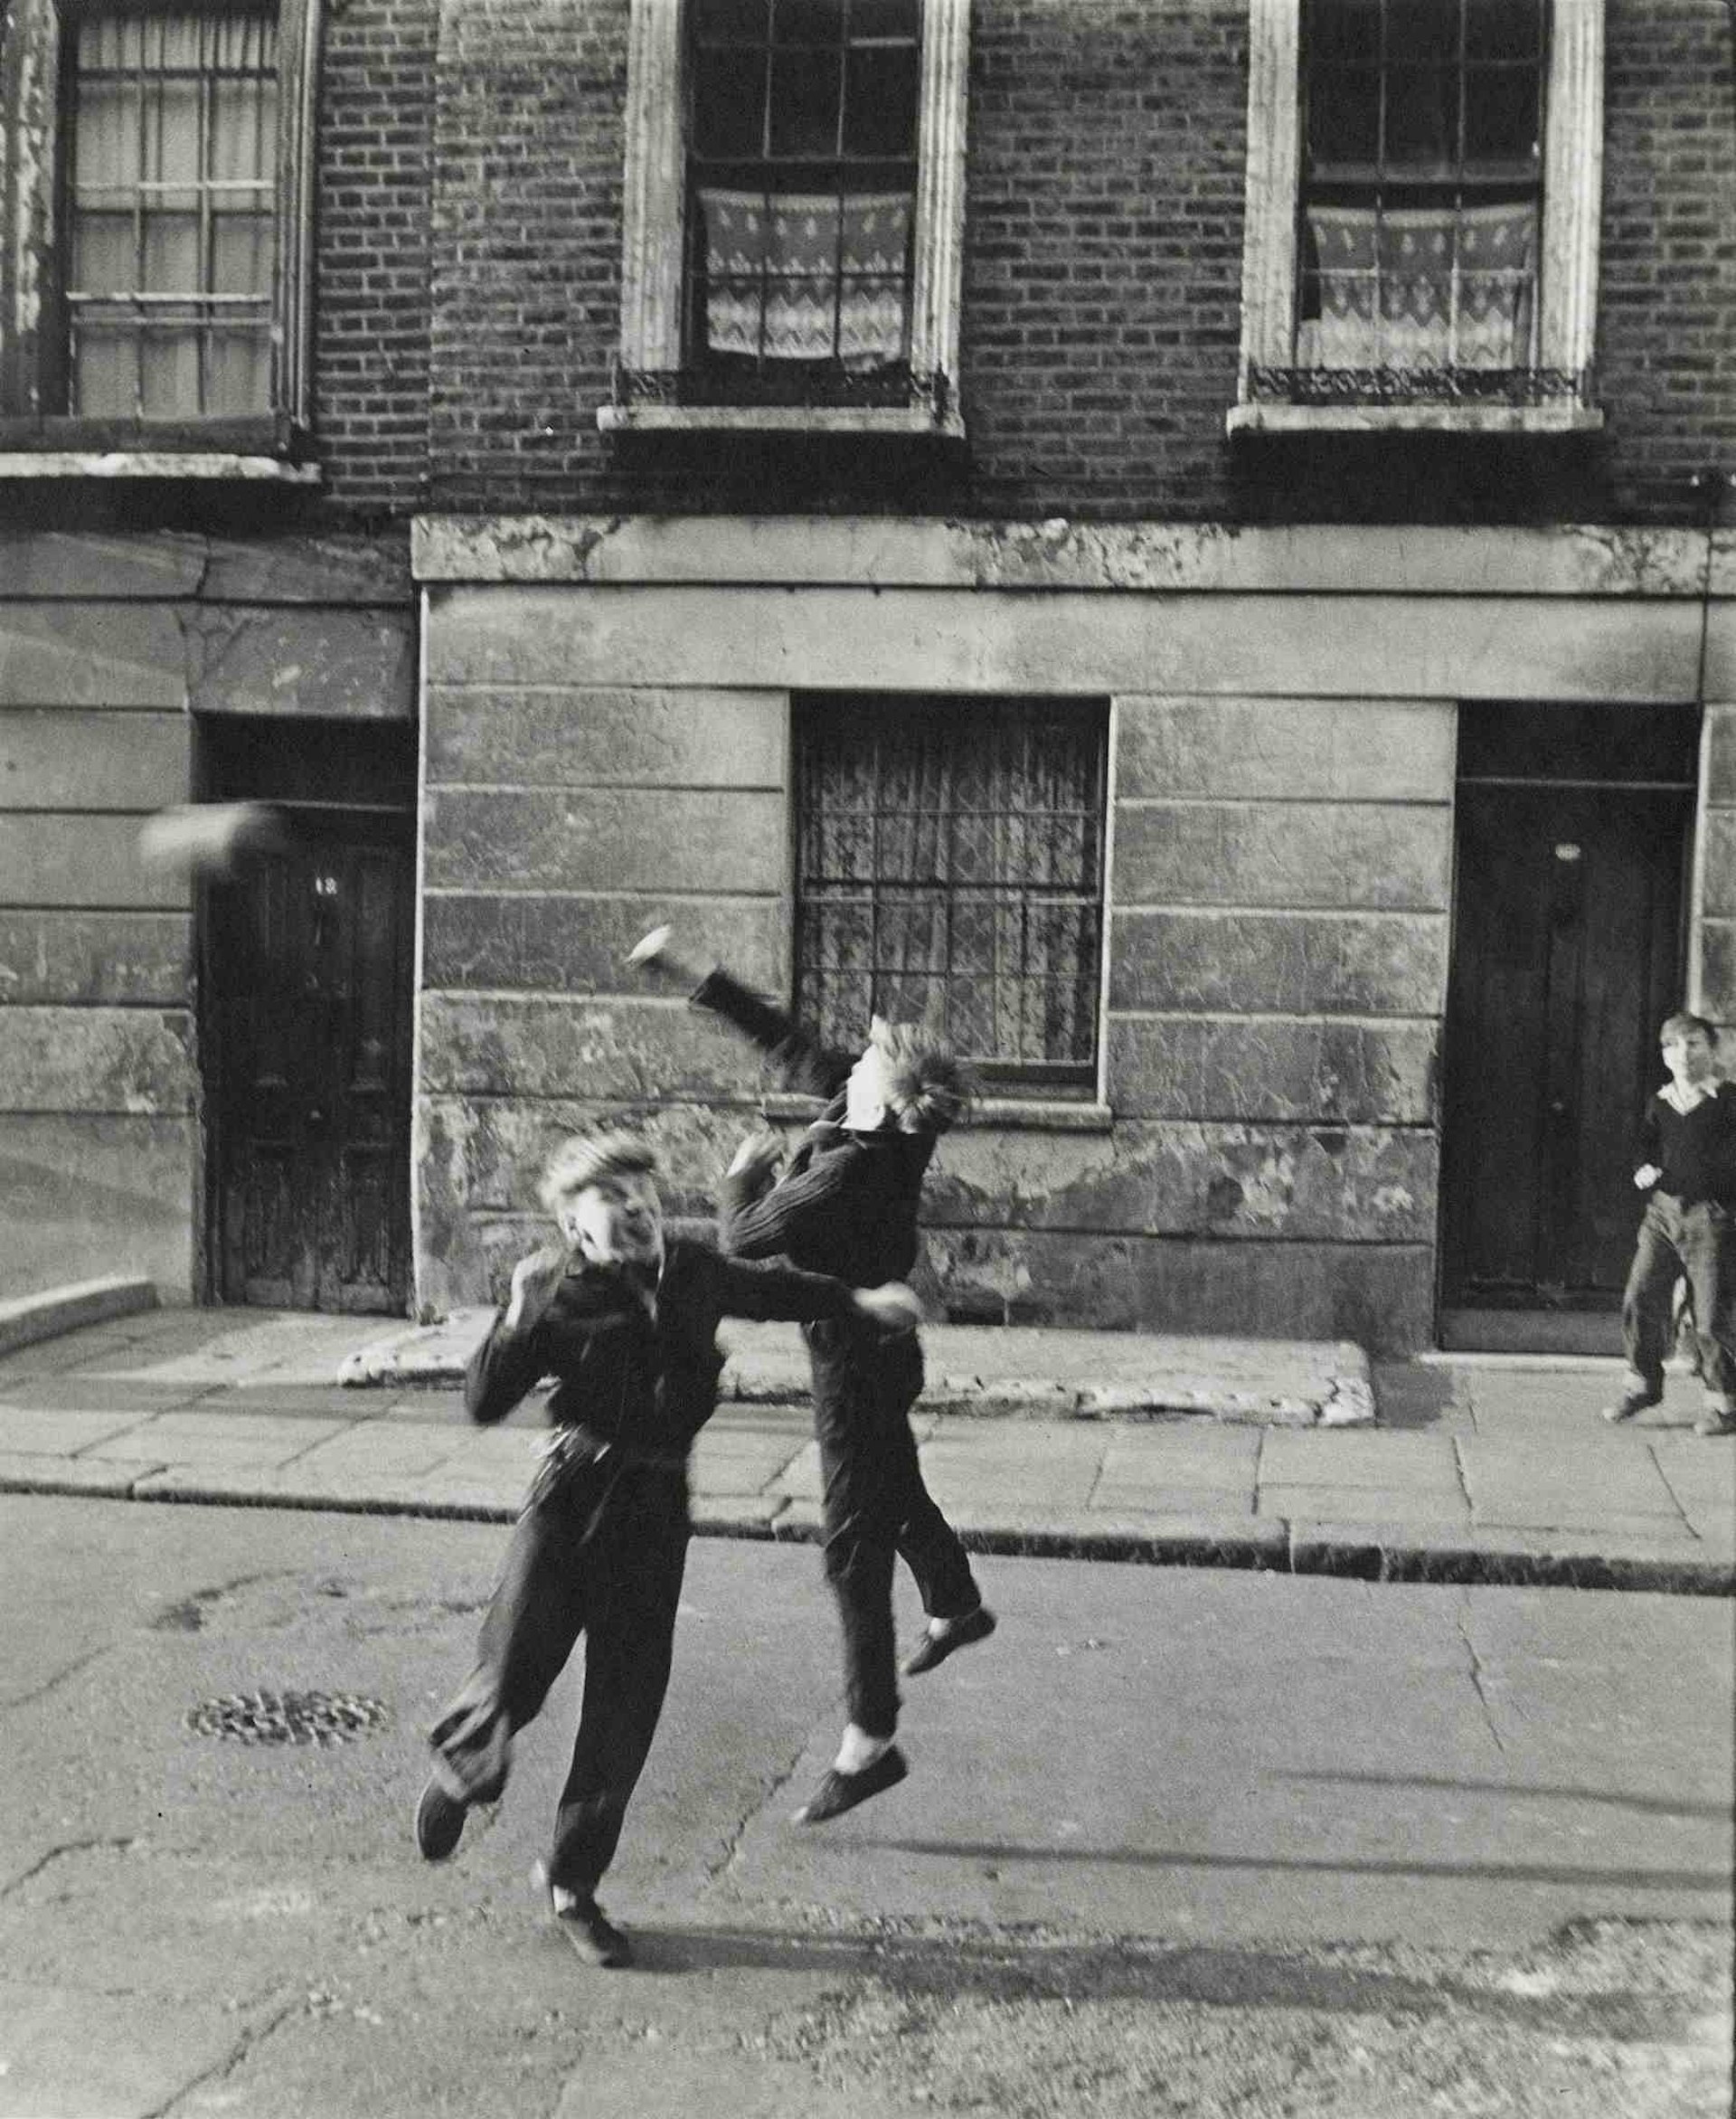 Brindley Road, Paddington, London, 1956.